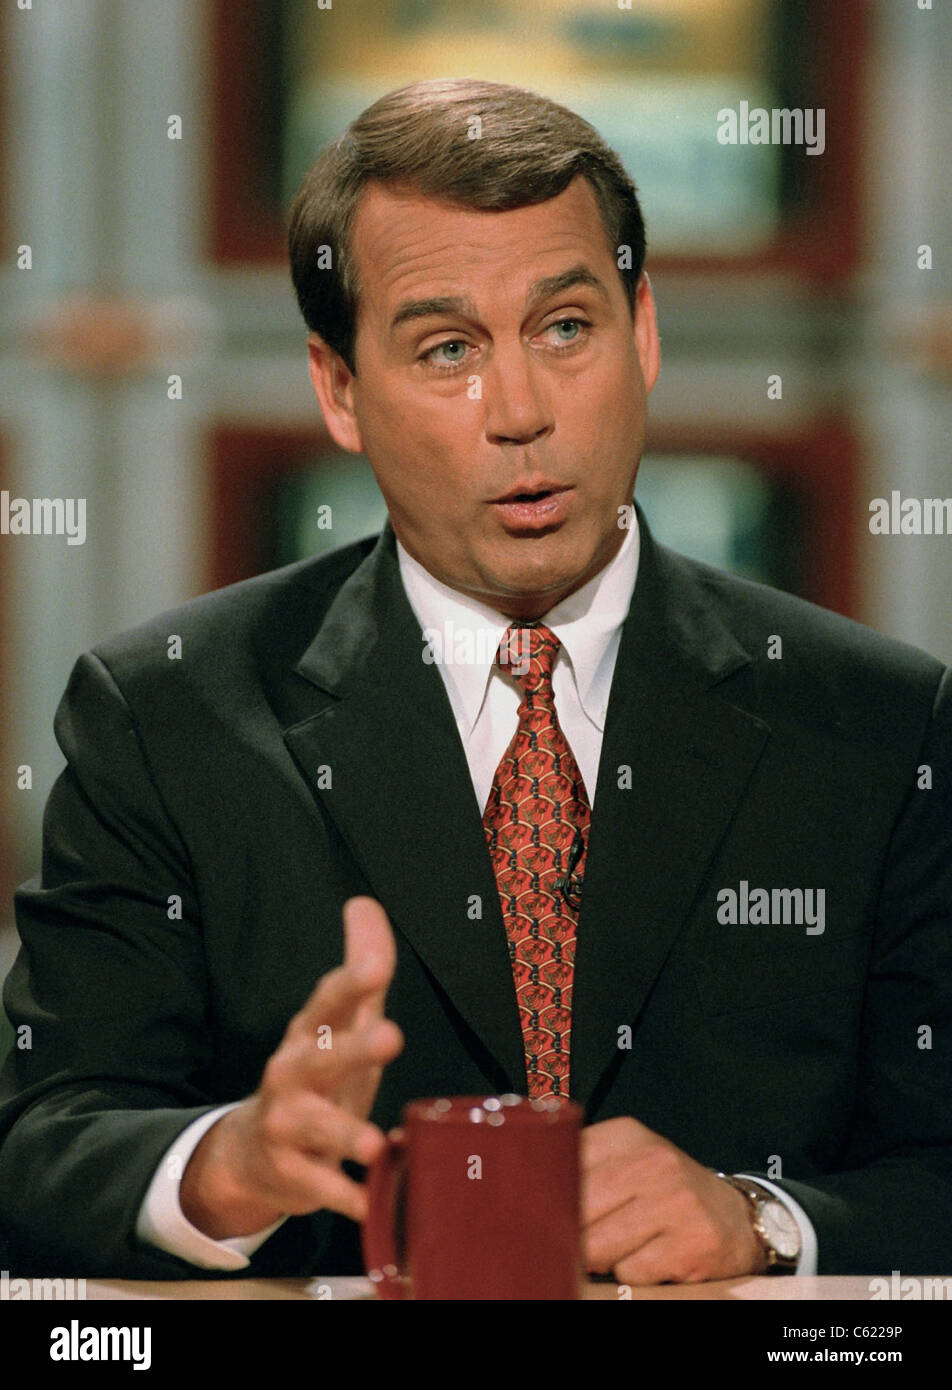 Rep. John Boehner (R-OH) on NBC's 'Meet the Press' Jan. 6, 1997 in Washington, DC Stock Photo